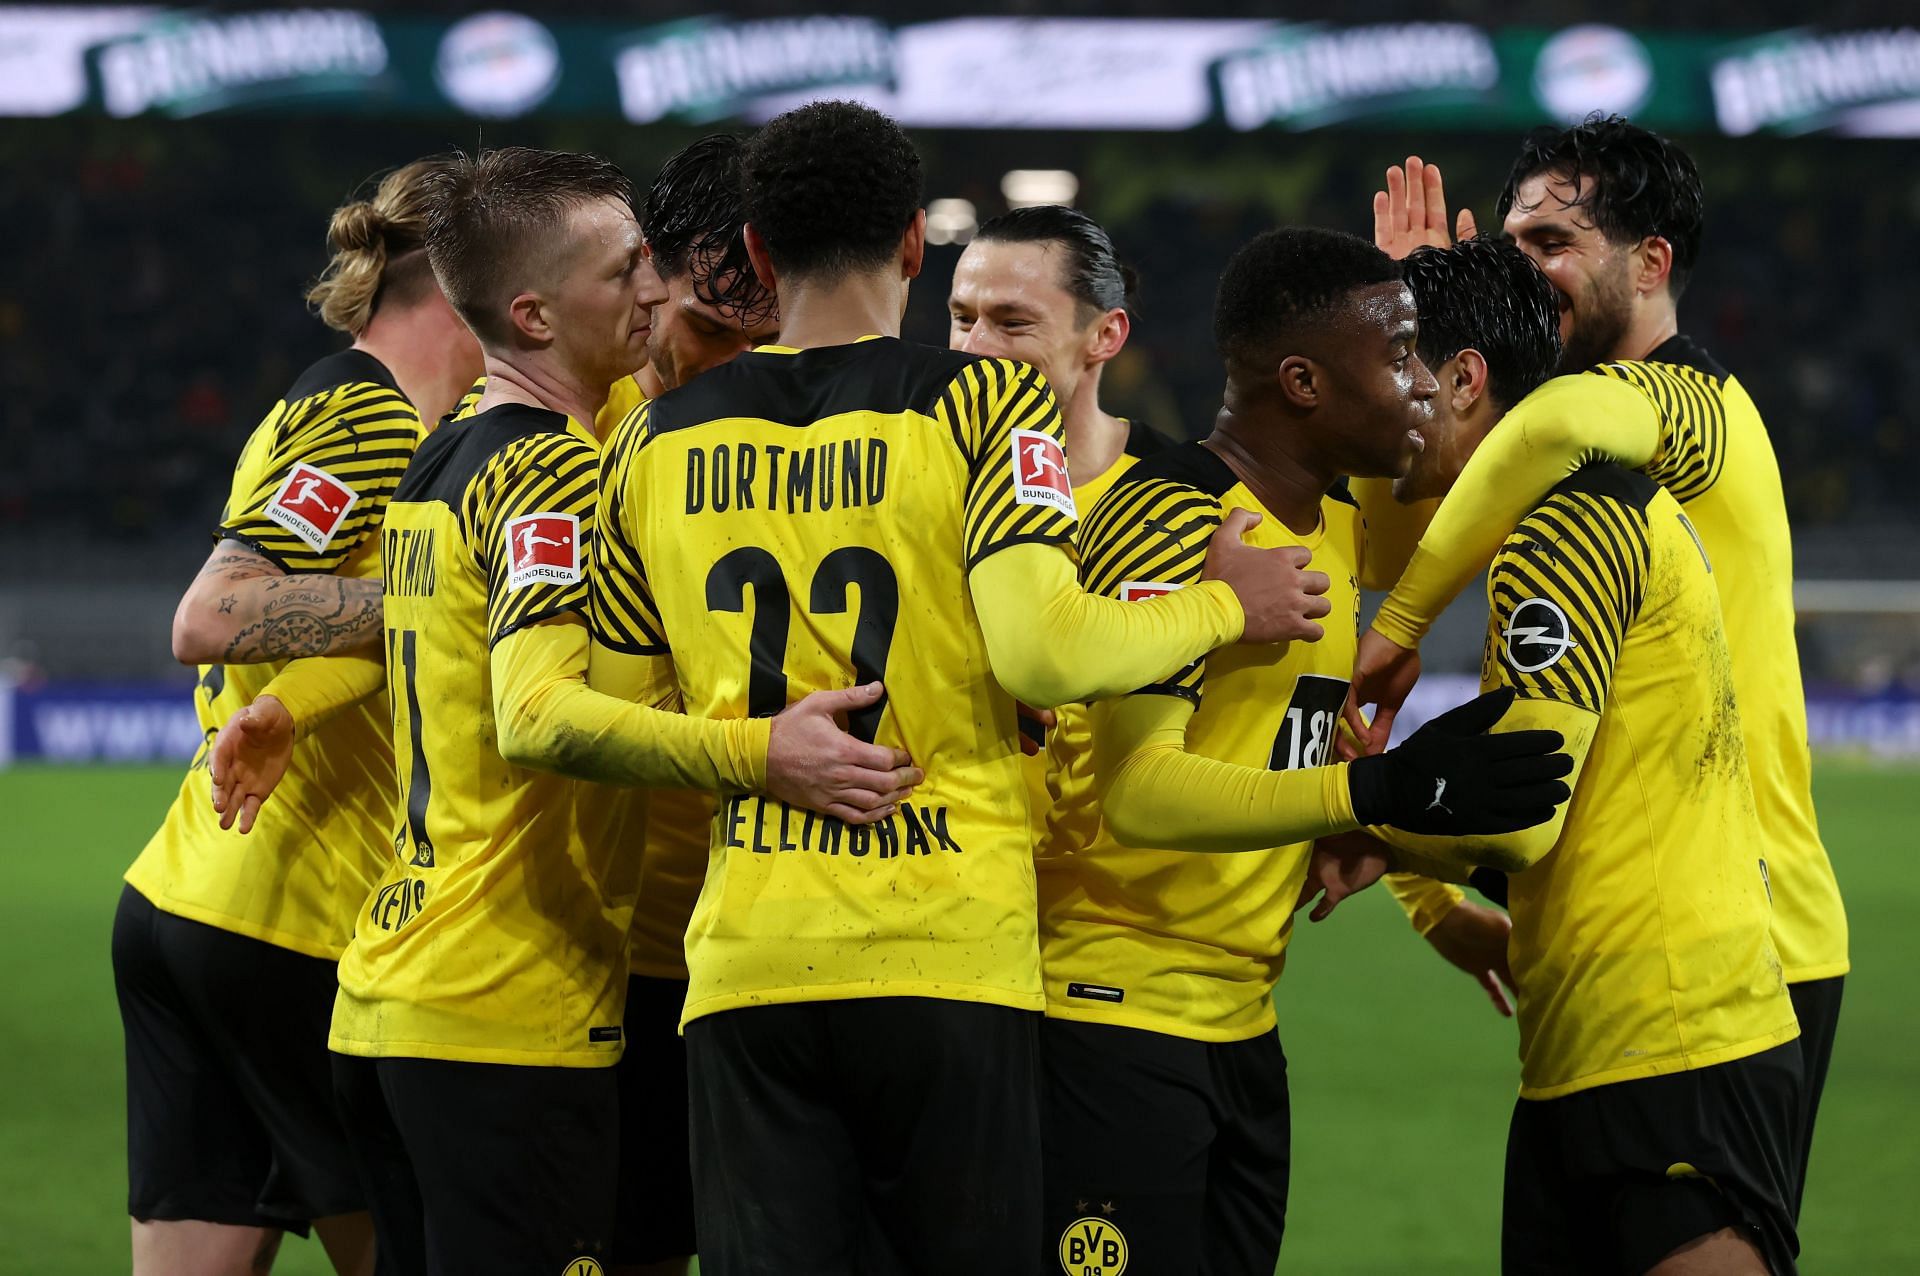 Borussia Dortmund will host Arminia Bielefeld on Sunday